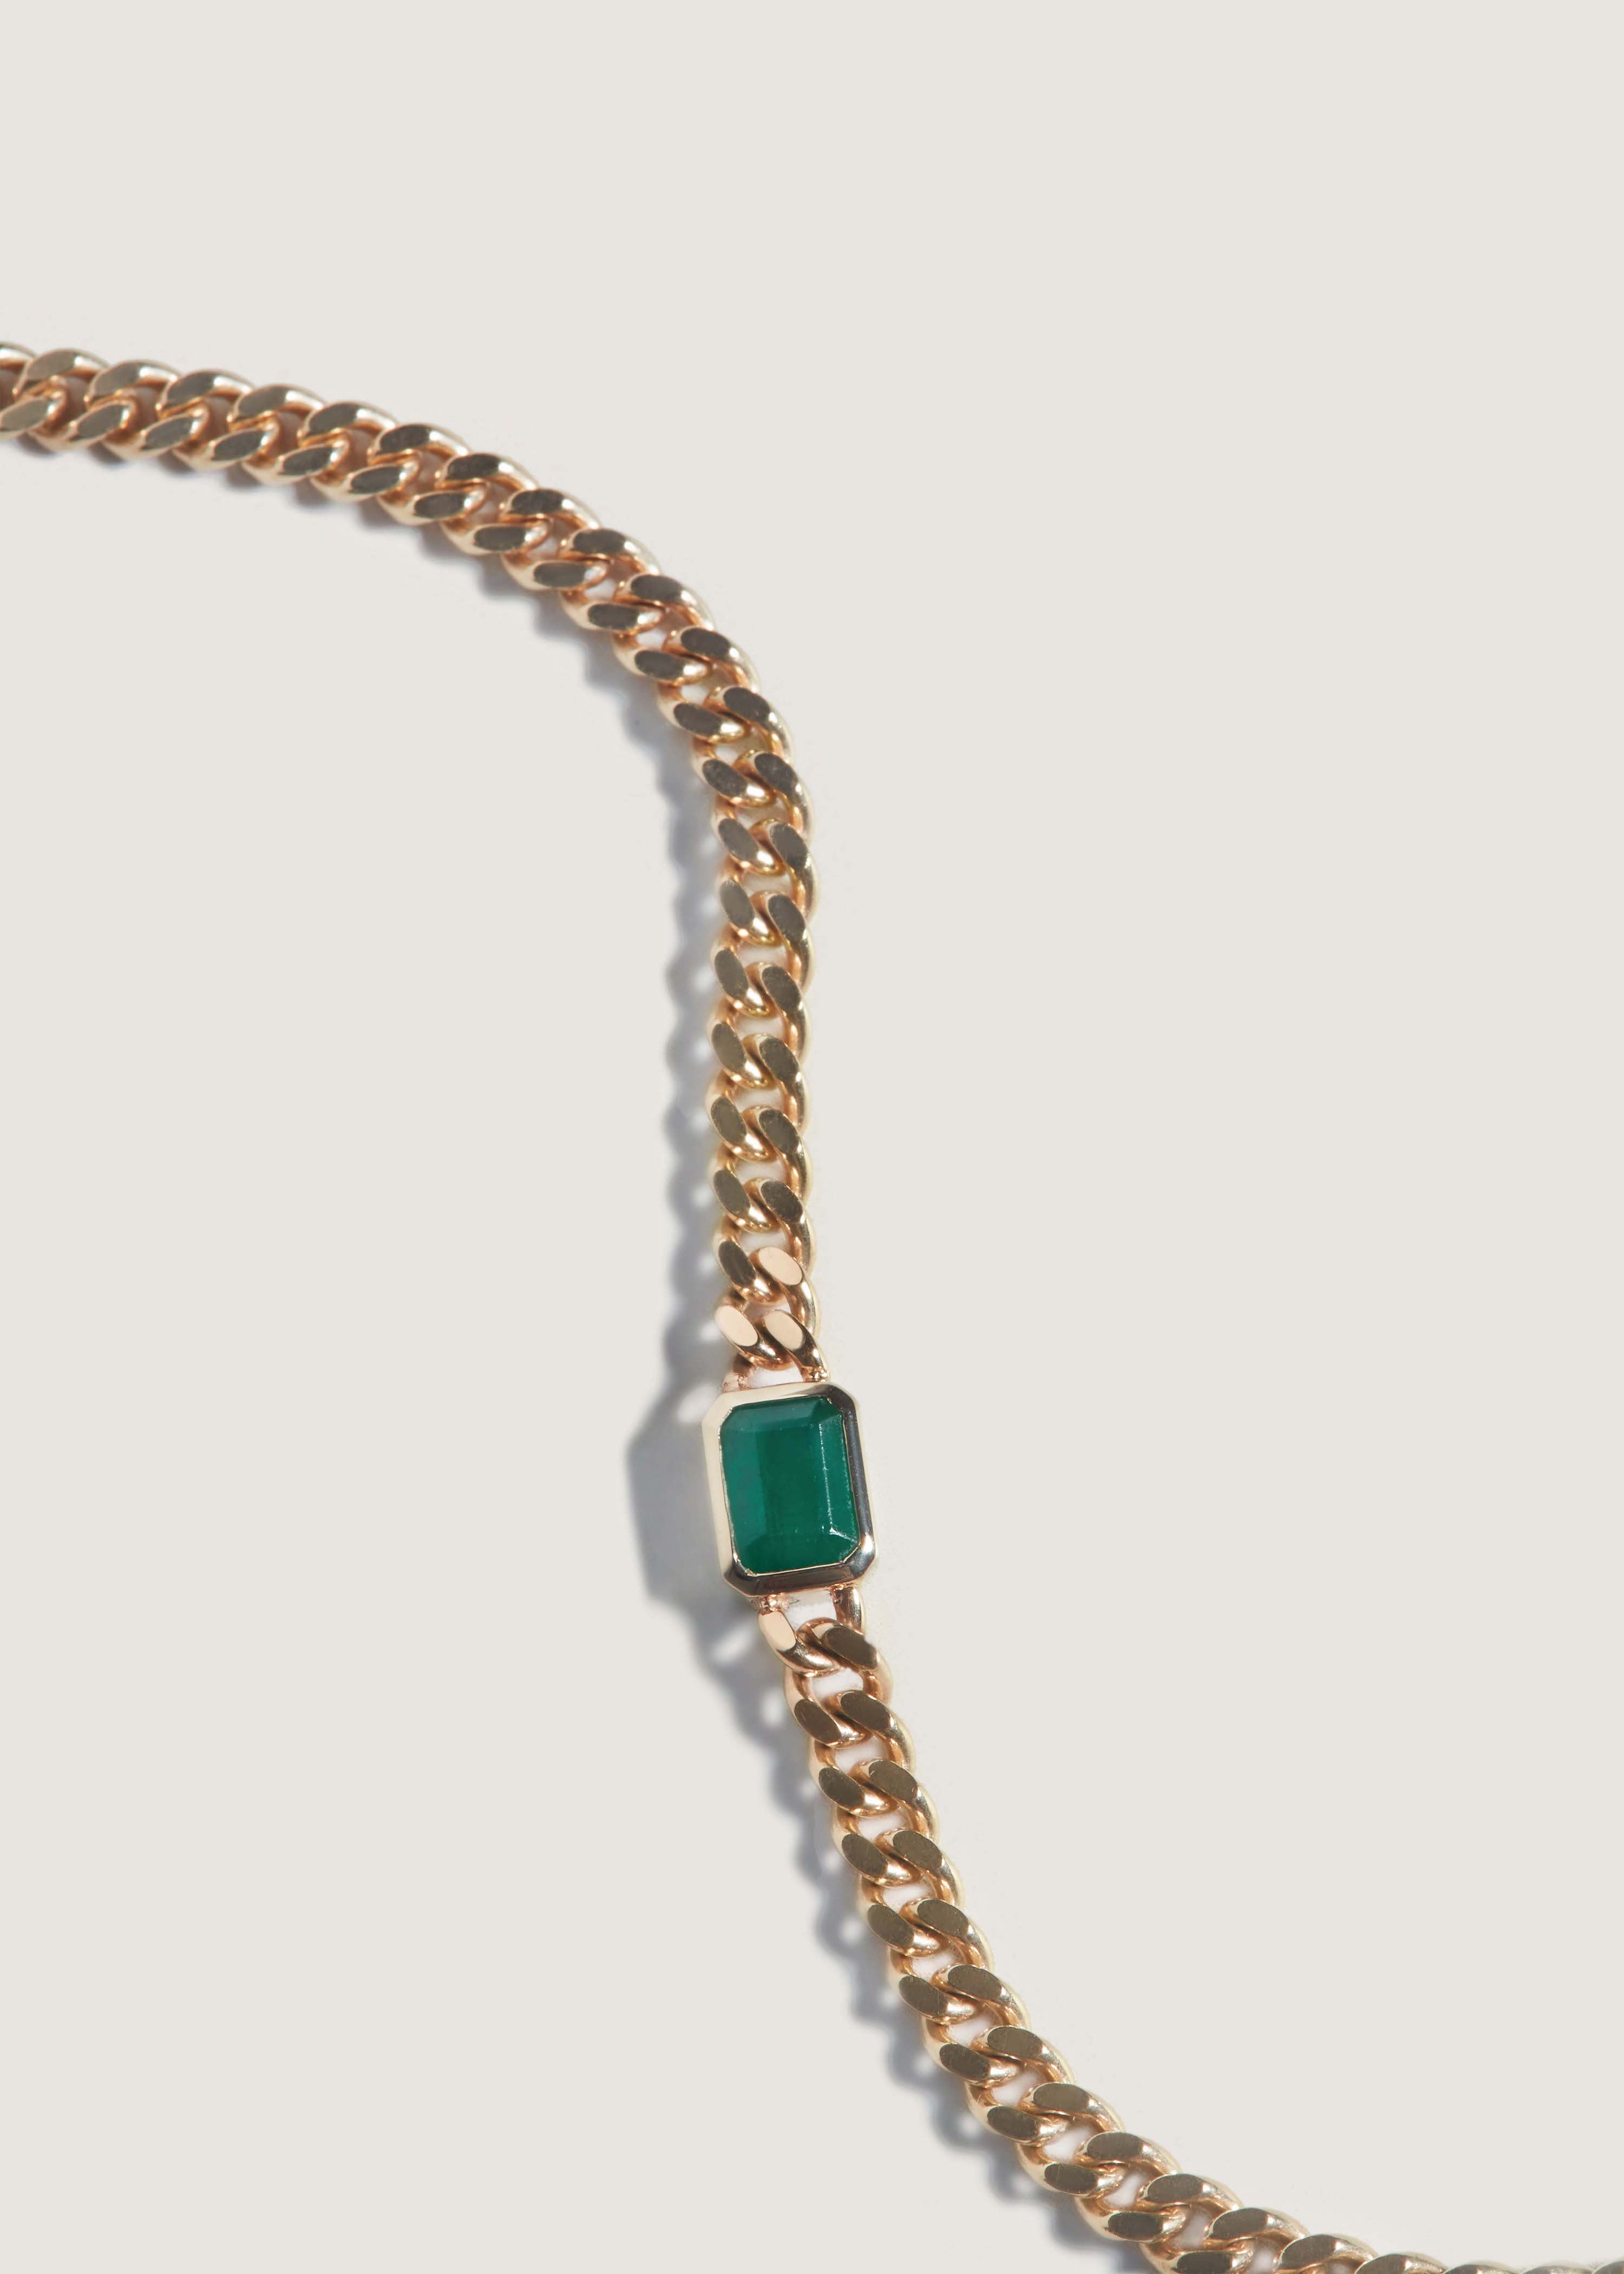 alt="Capri Curb Chain Necklace III"